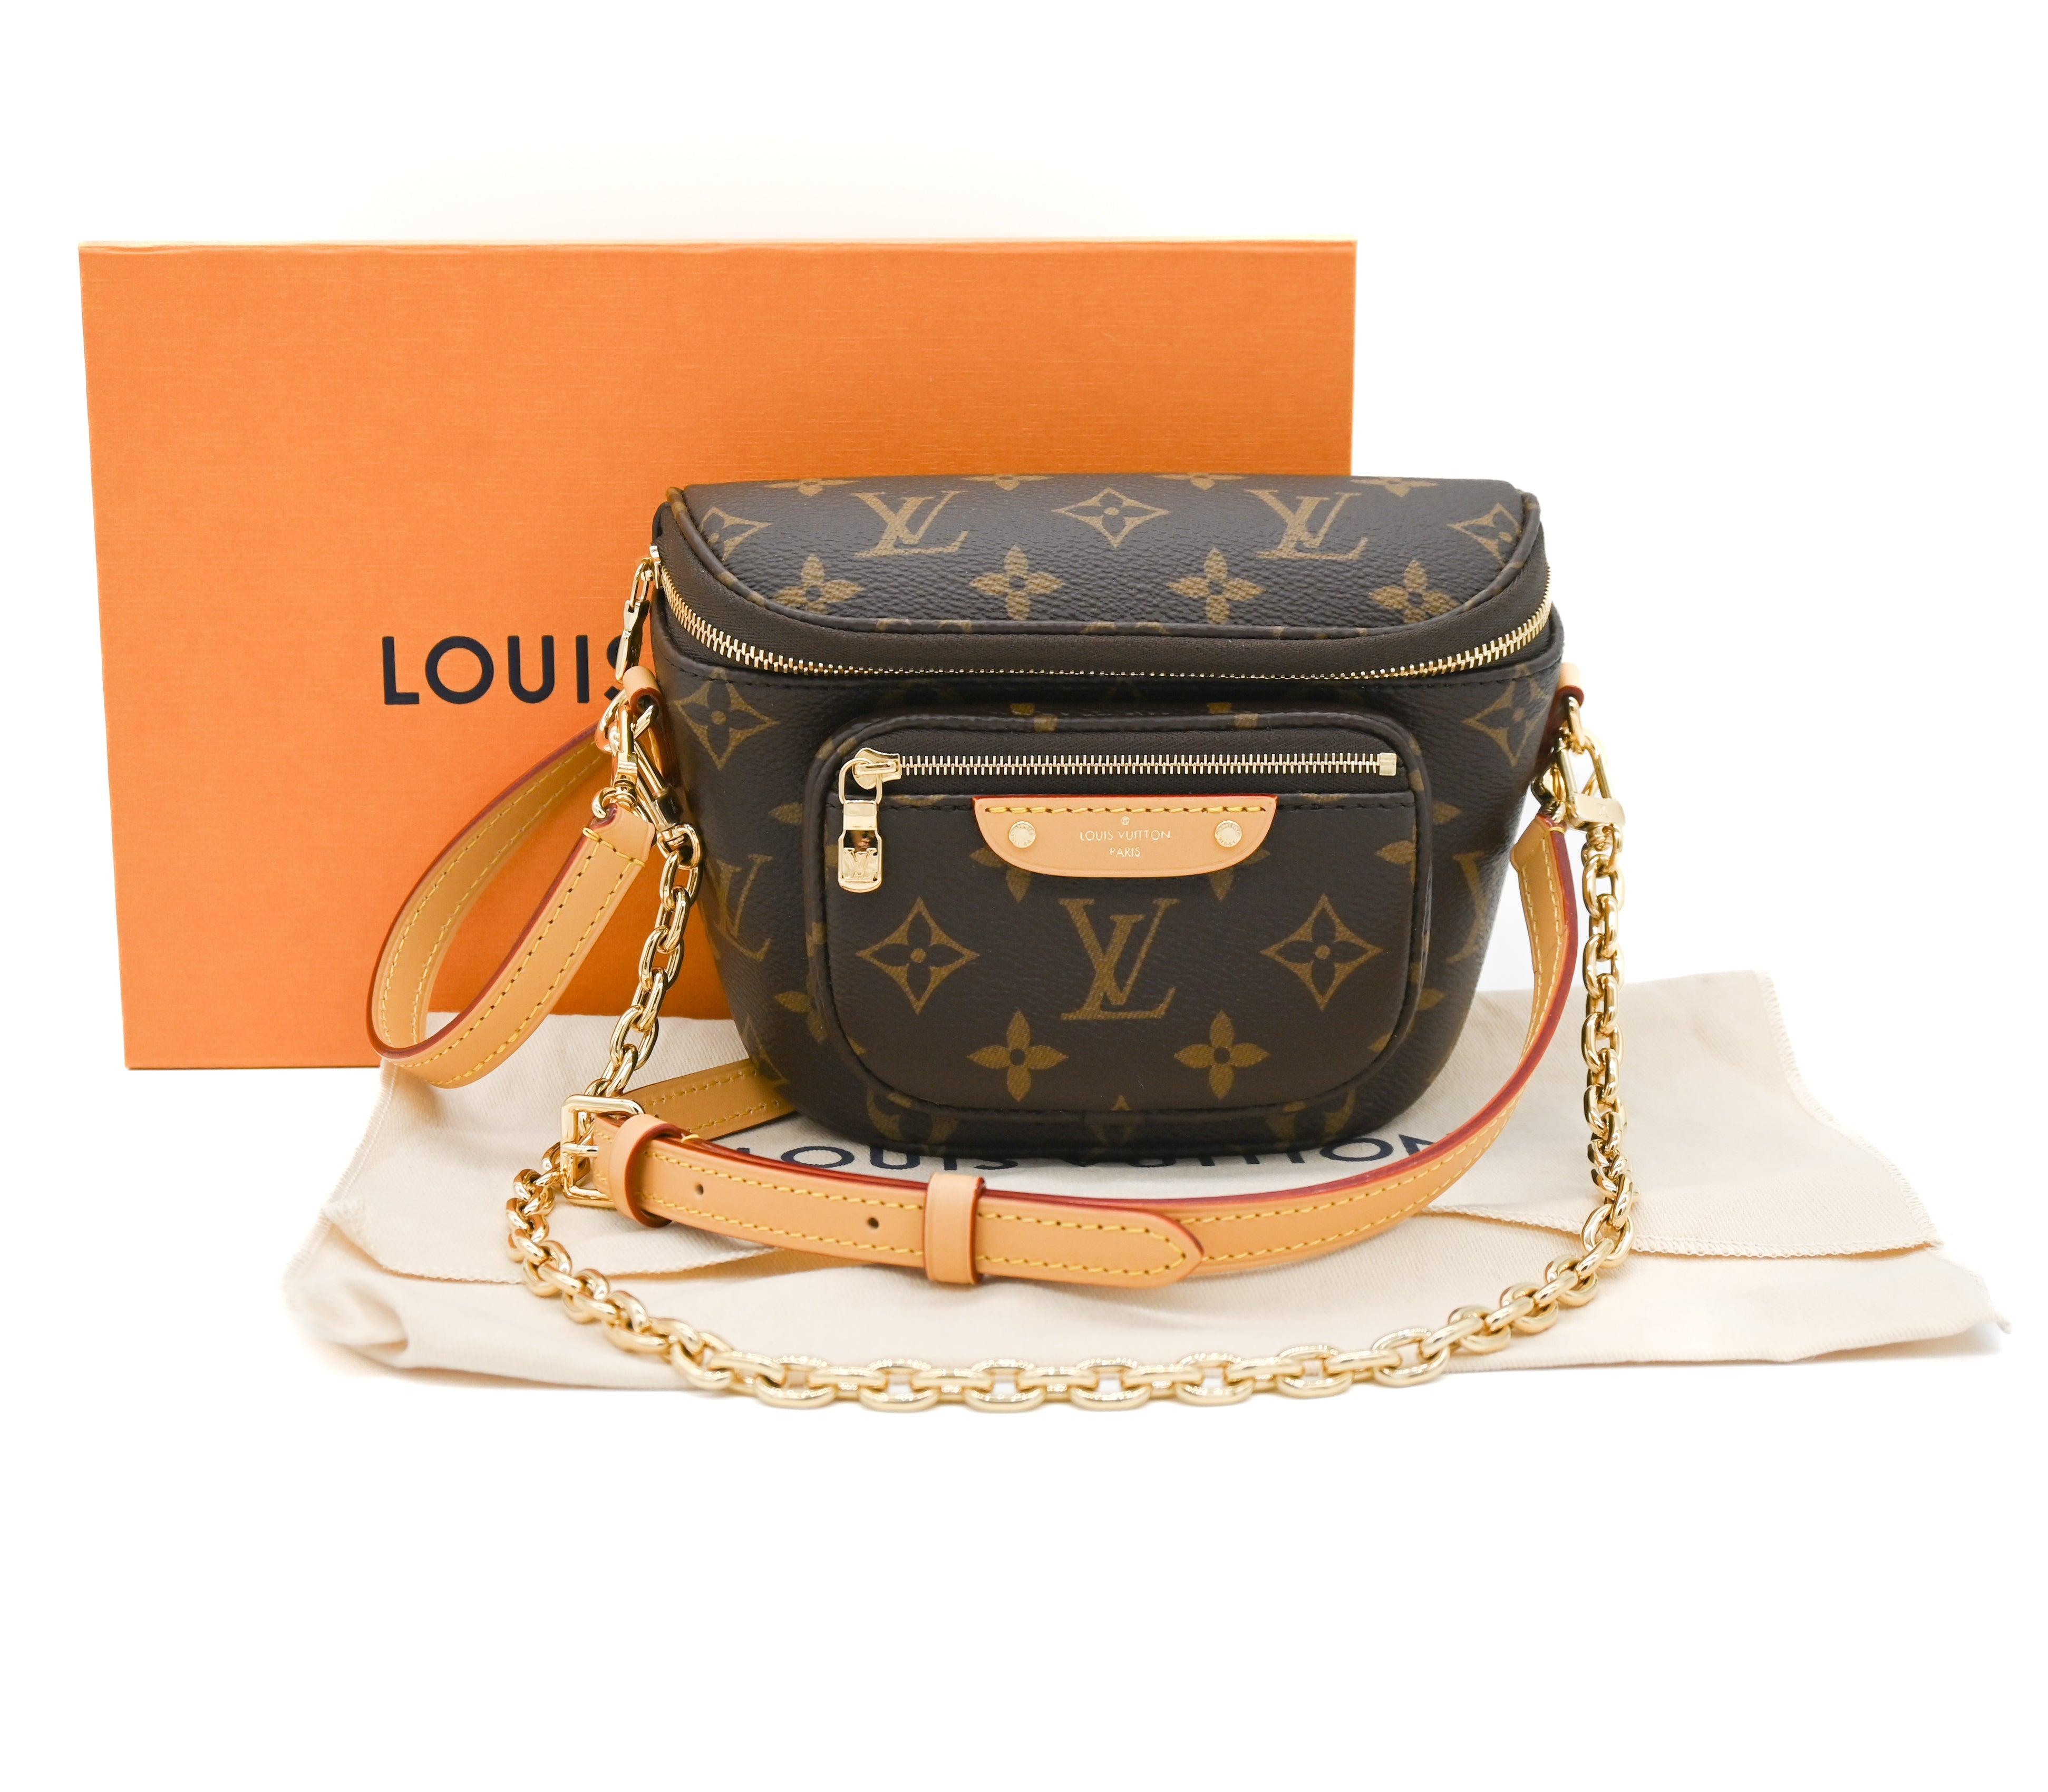 LOUIS VUITTON NEW IN BOX Louis Vuitton Monogram Mini Bum Bag - Vault 55